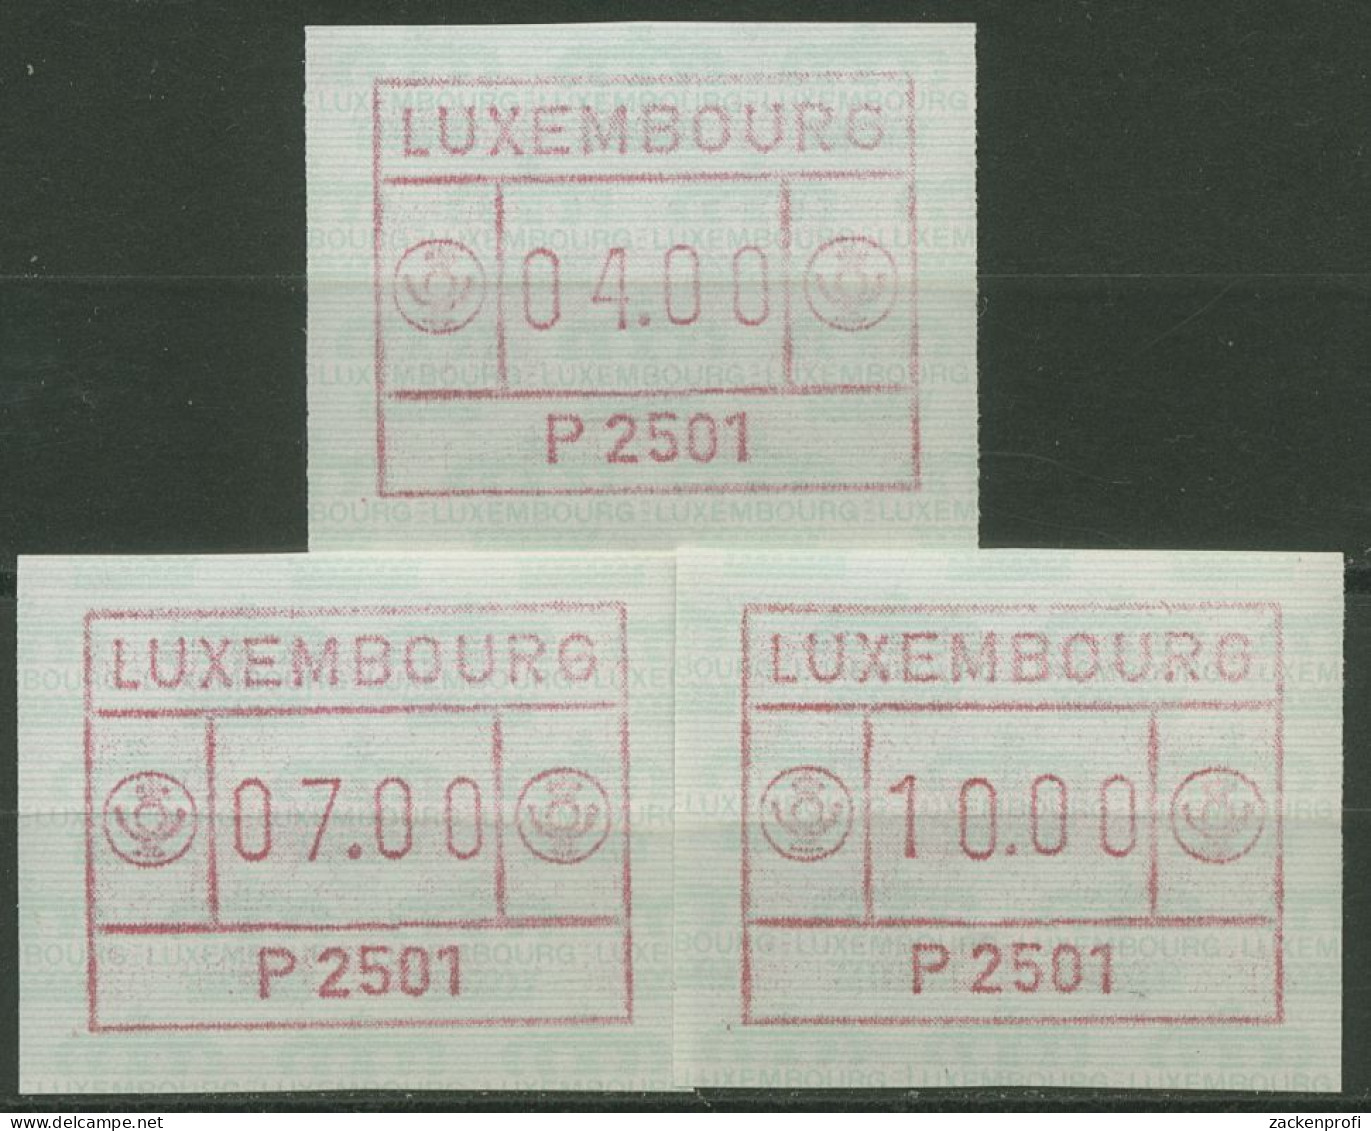 Luxemburg 1983 Automatenmarke Automat P 2501 Satz 1.1.1 B S1 Postfrisch - Vignettes D'affranchissement